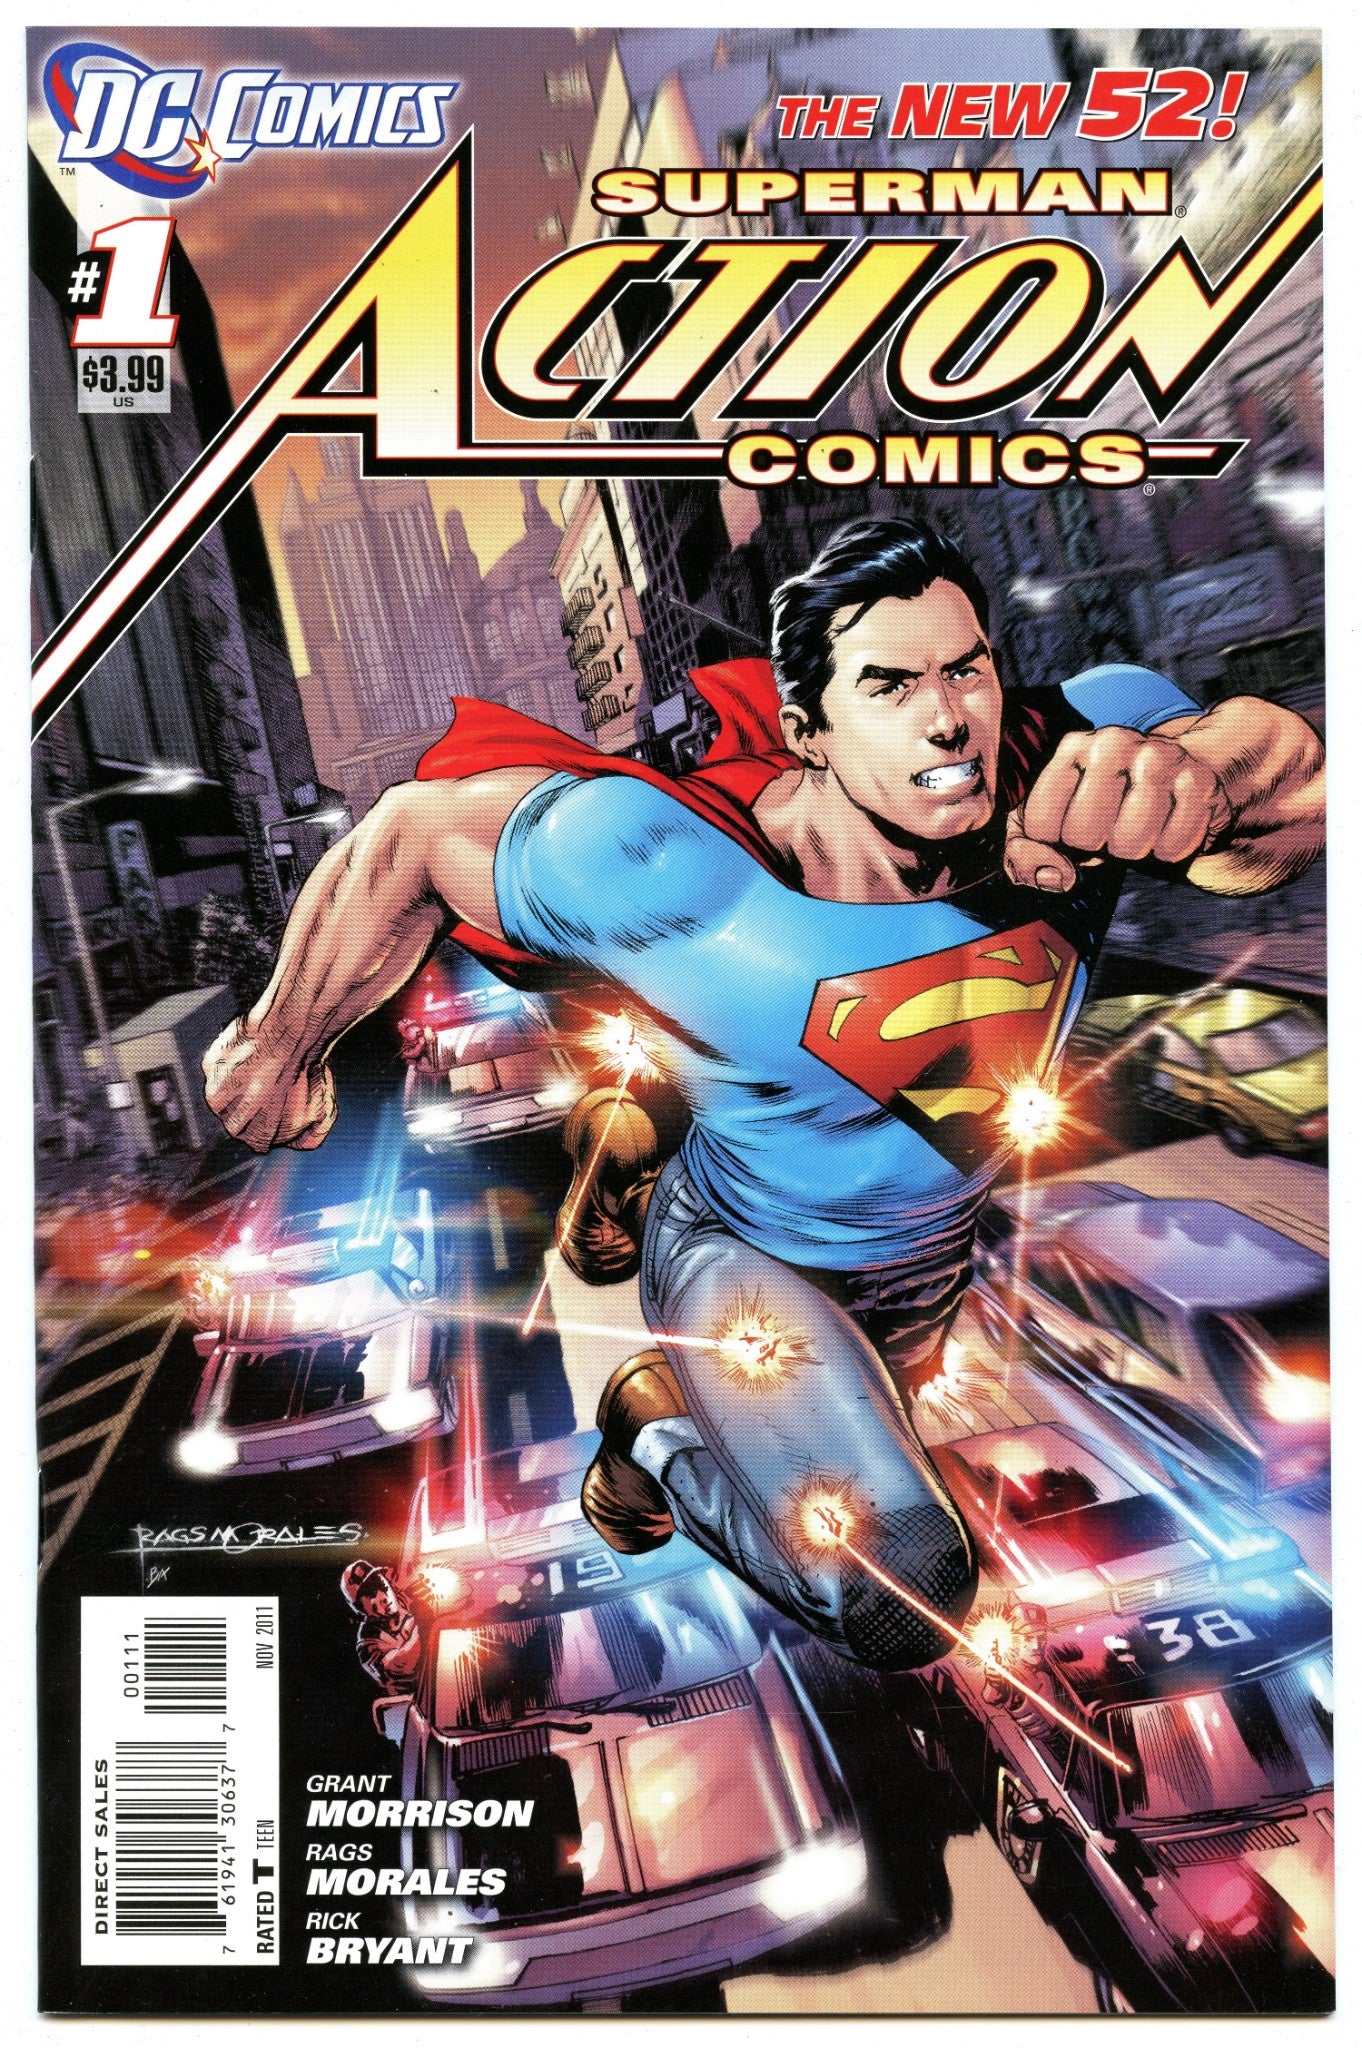 Action Comics V2 1 (Nov 2011) NM- (9.2)